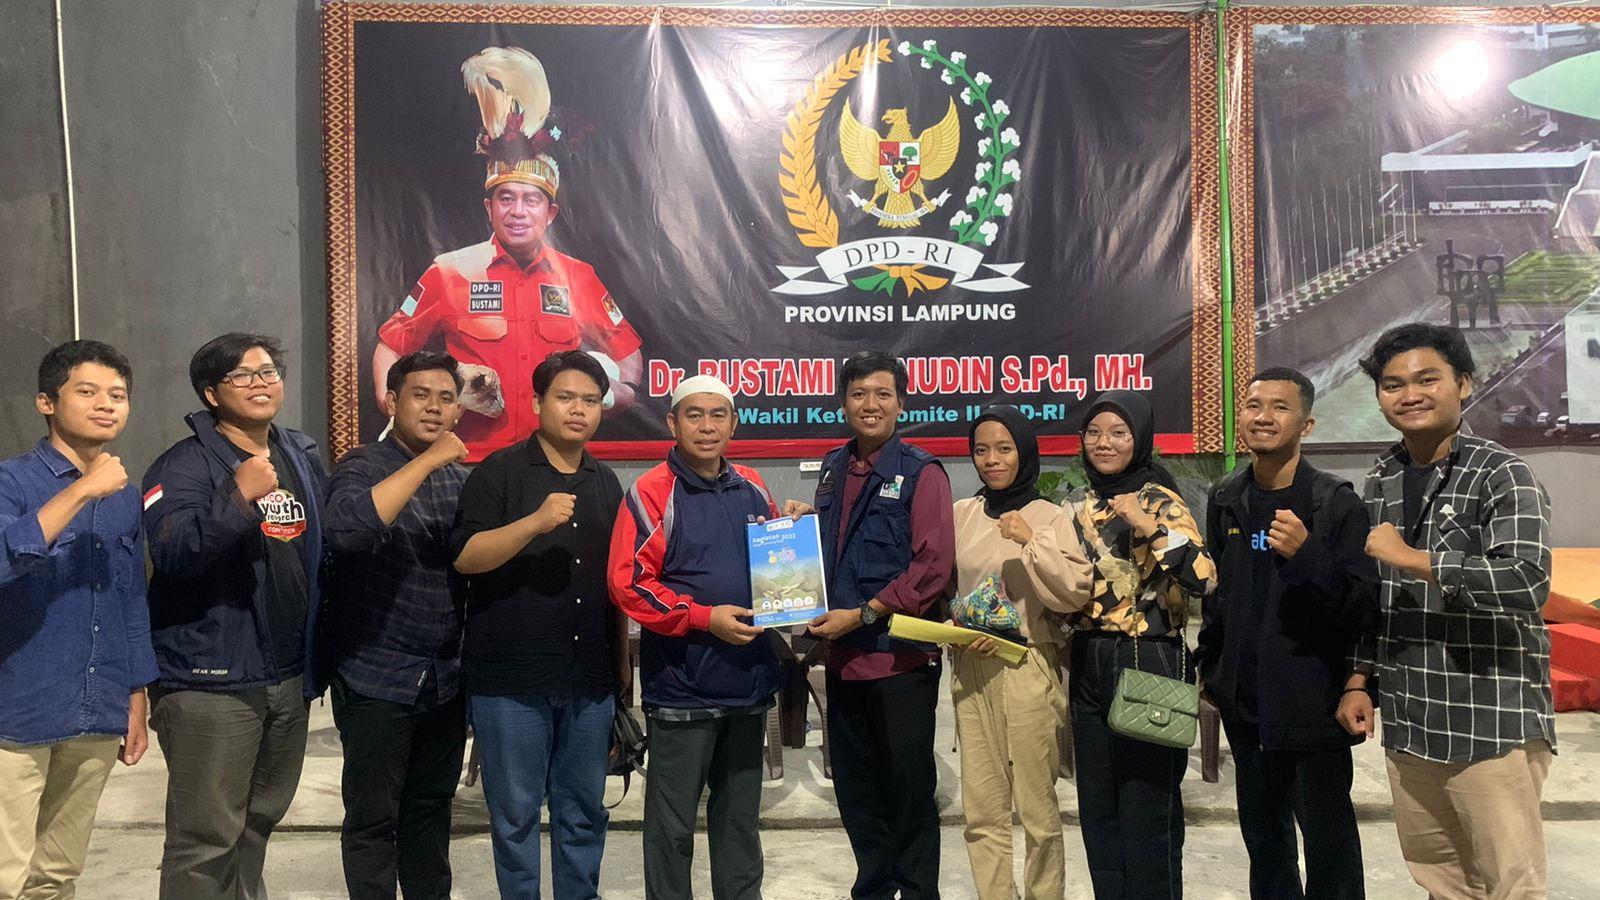 Wakil Ketua Komite II DPD-RI, Dr. Bustami Zainudin, S.Pd.,MH, Dukung Kegiatan Pendidikan Pelajar Lampung Expo 2022